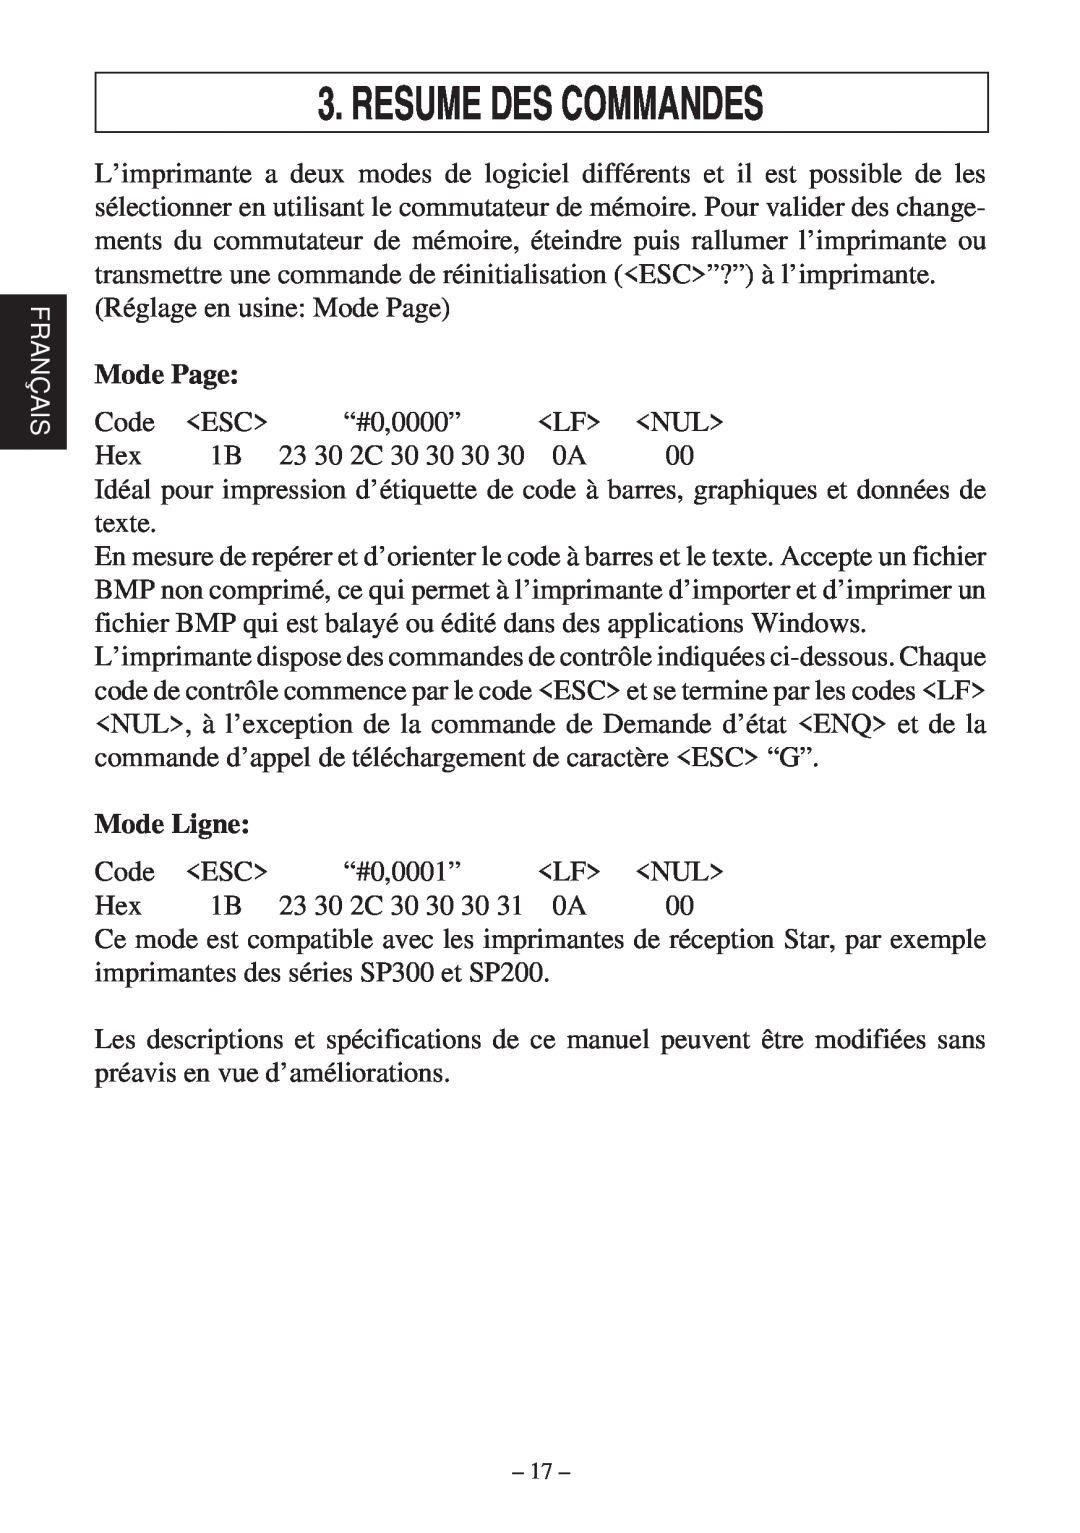 Star Micronics TSP400 Series user manual Resume Des Commandes, Mode Page, Mode Ligne 